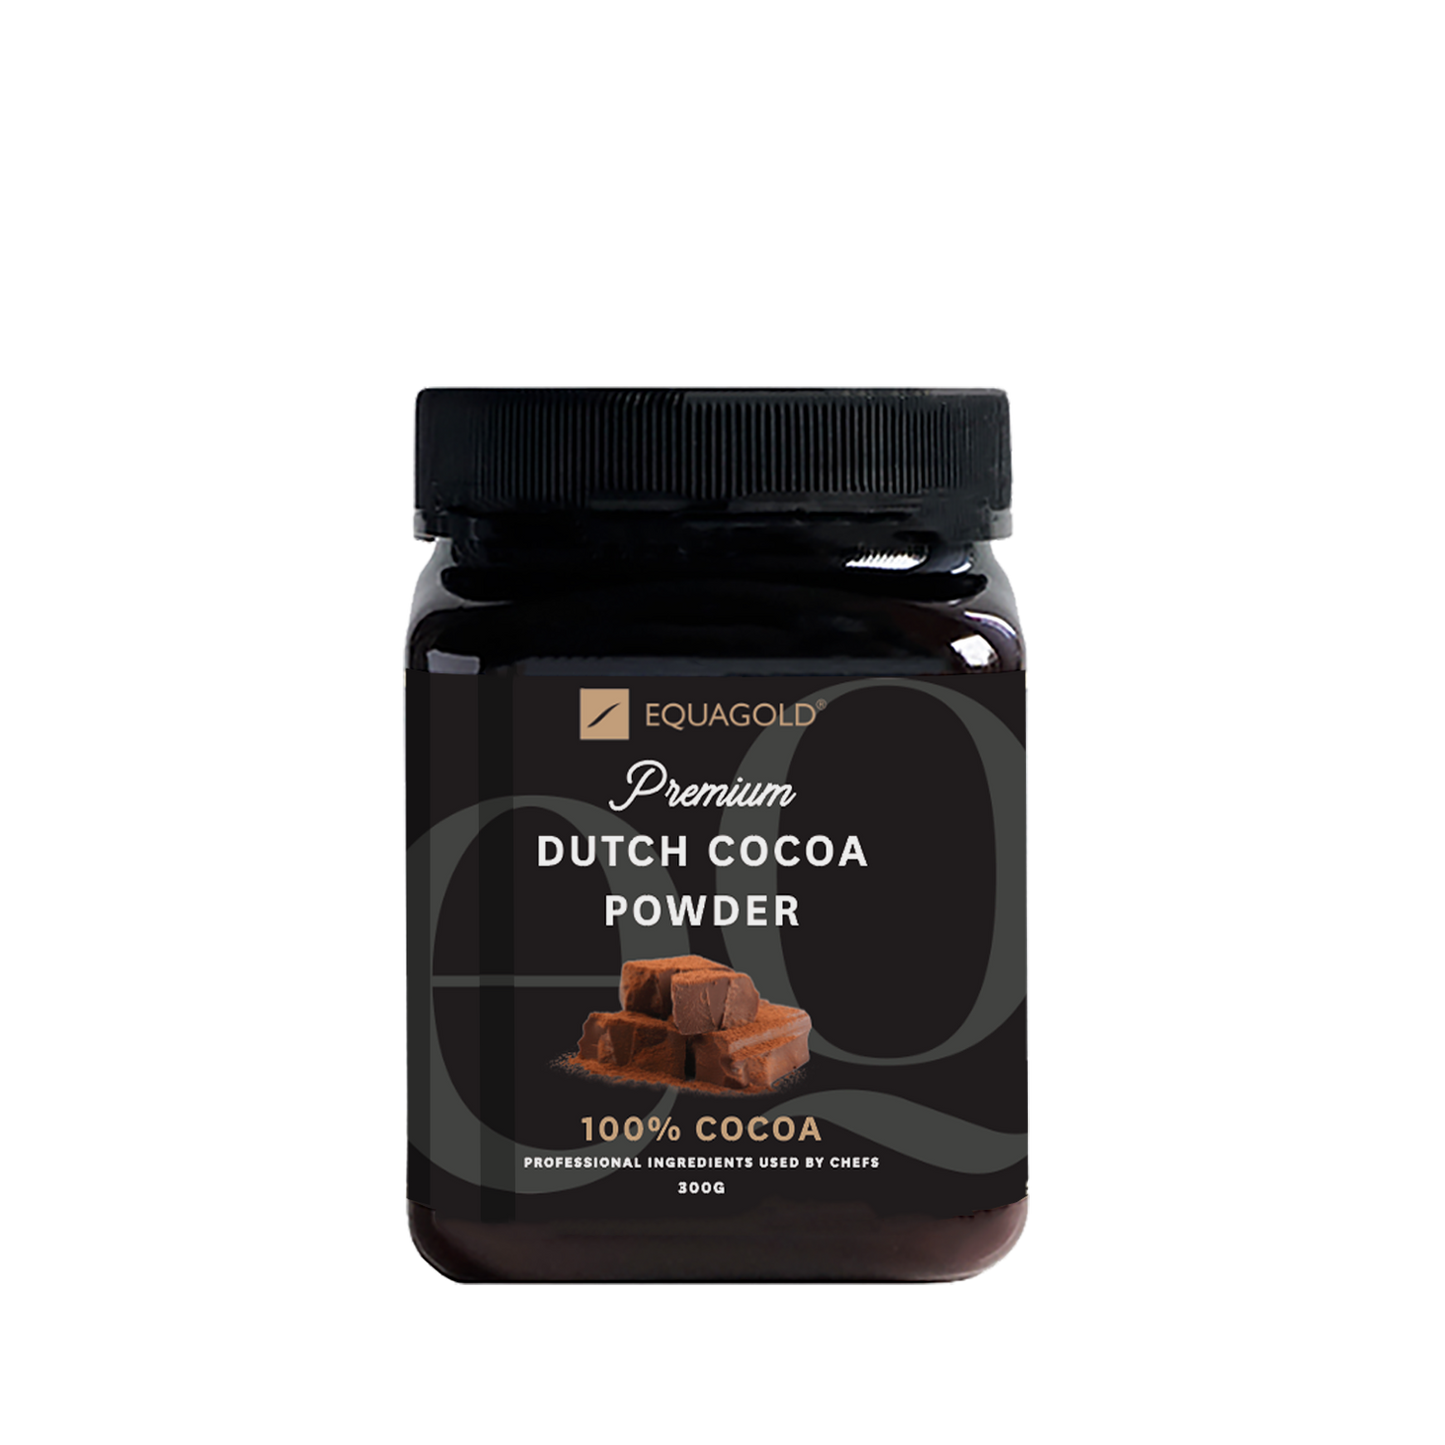 Equagold Premium Dutch Cocoa Powder 300g